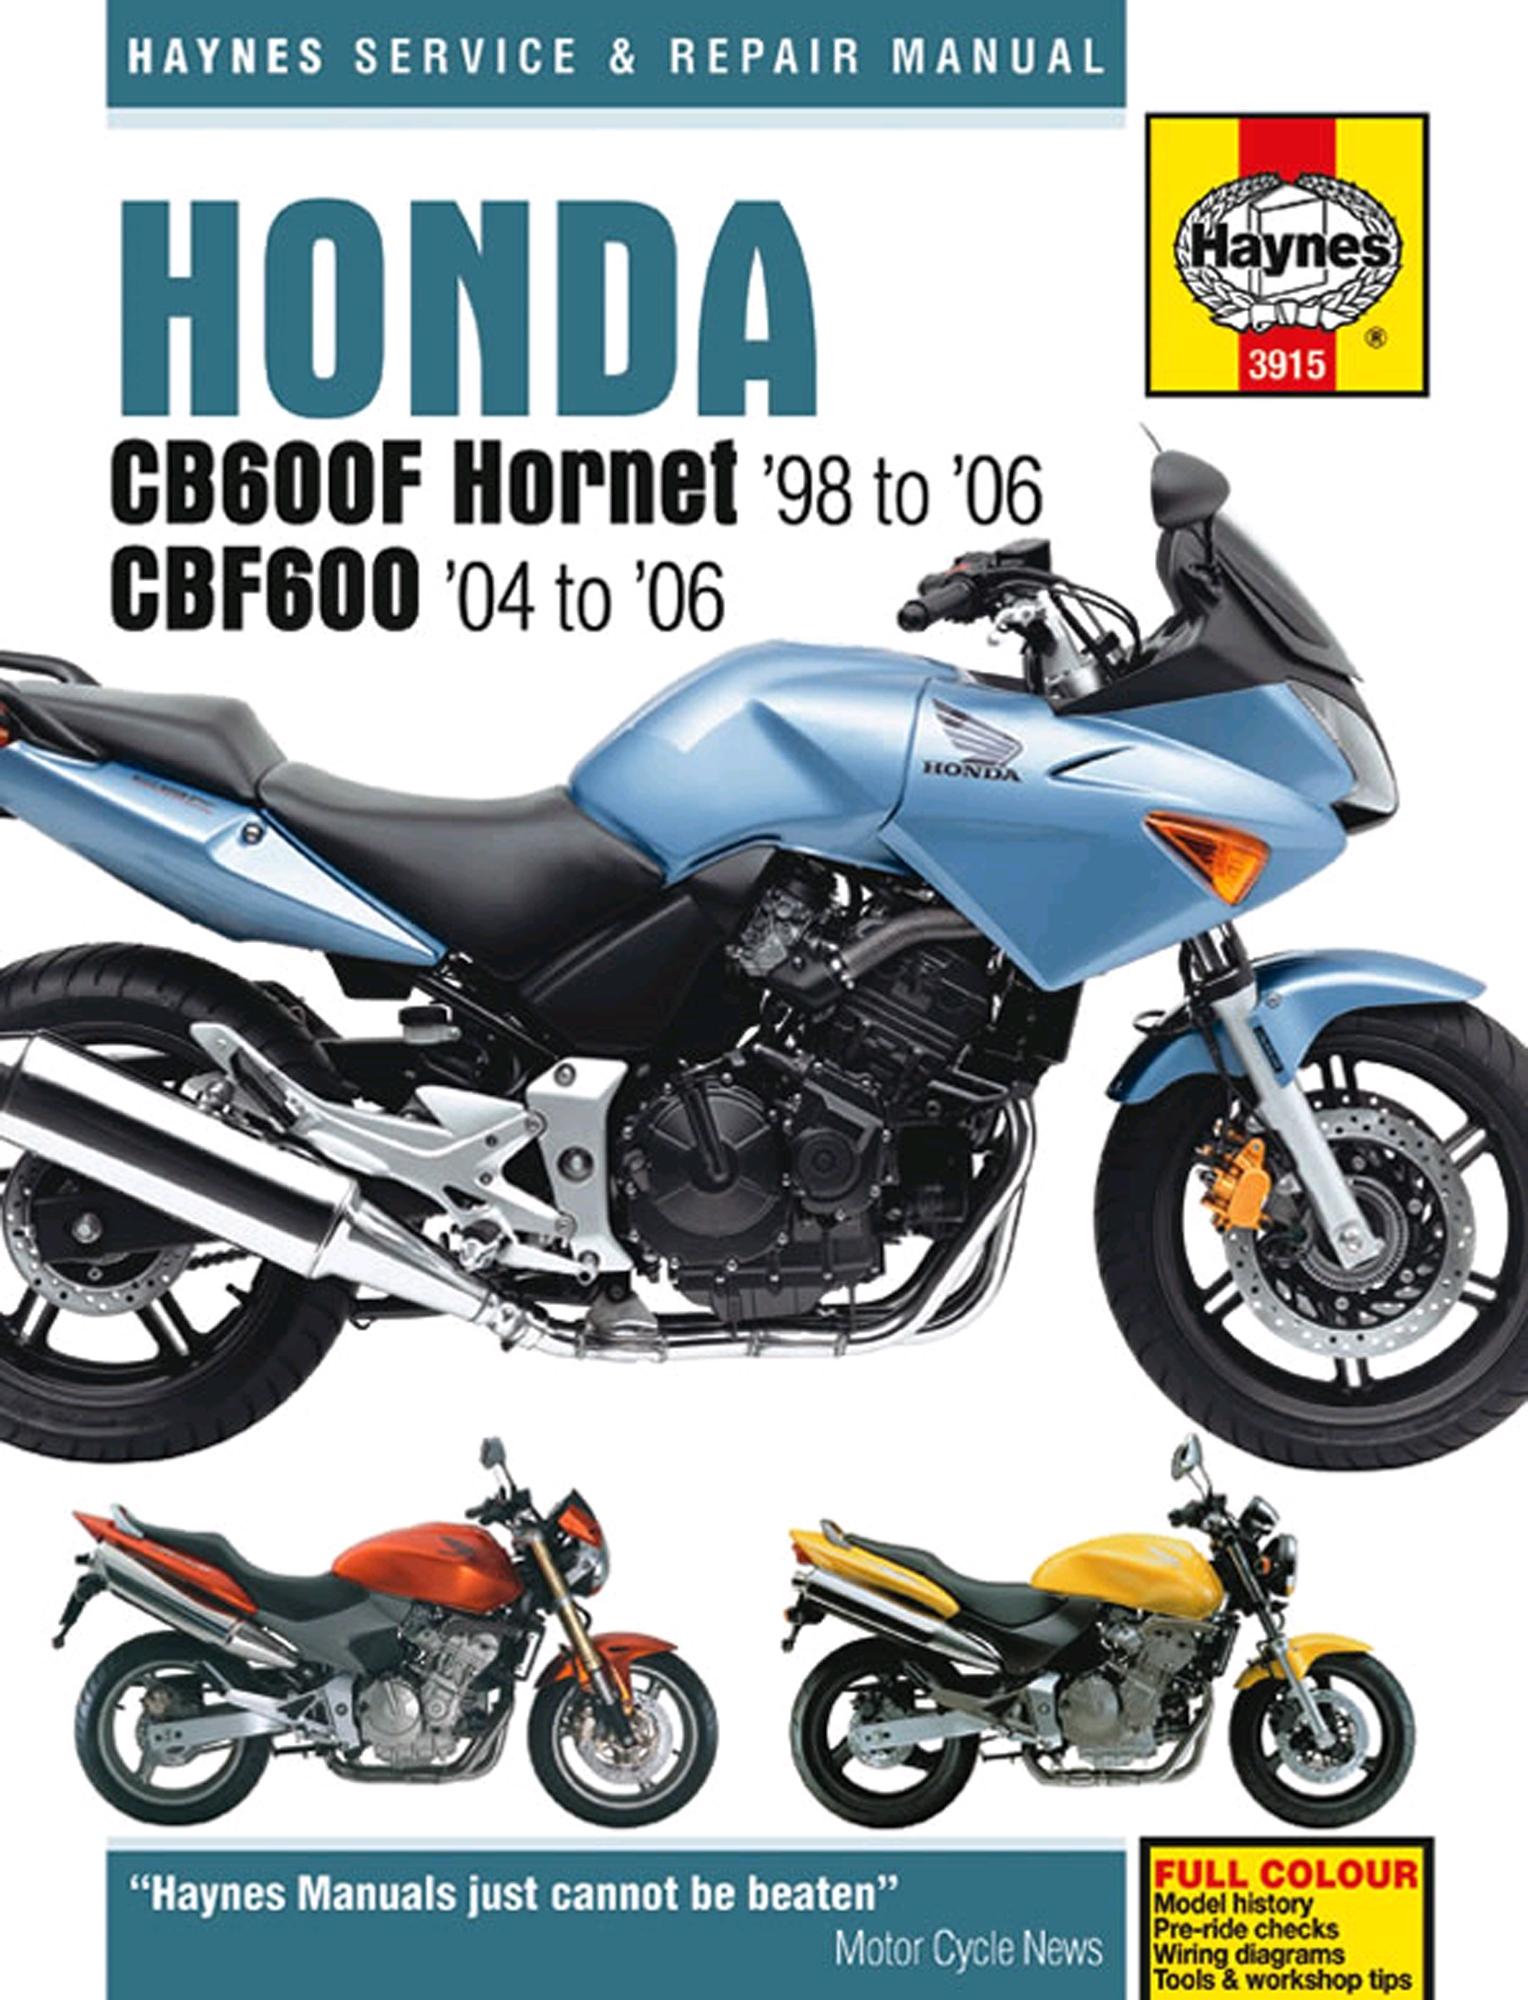 Honda motorcycles ashford #7